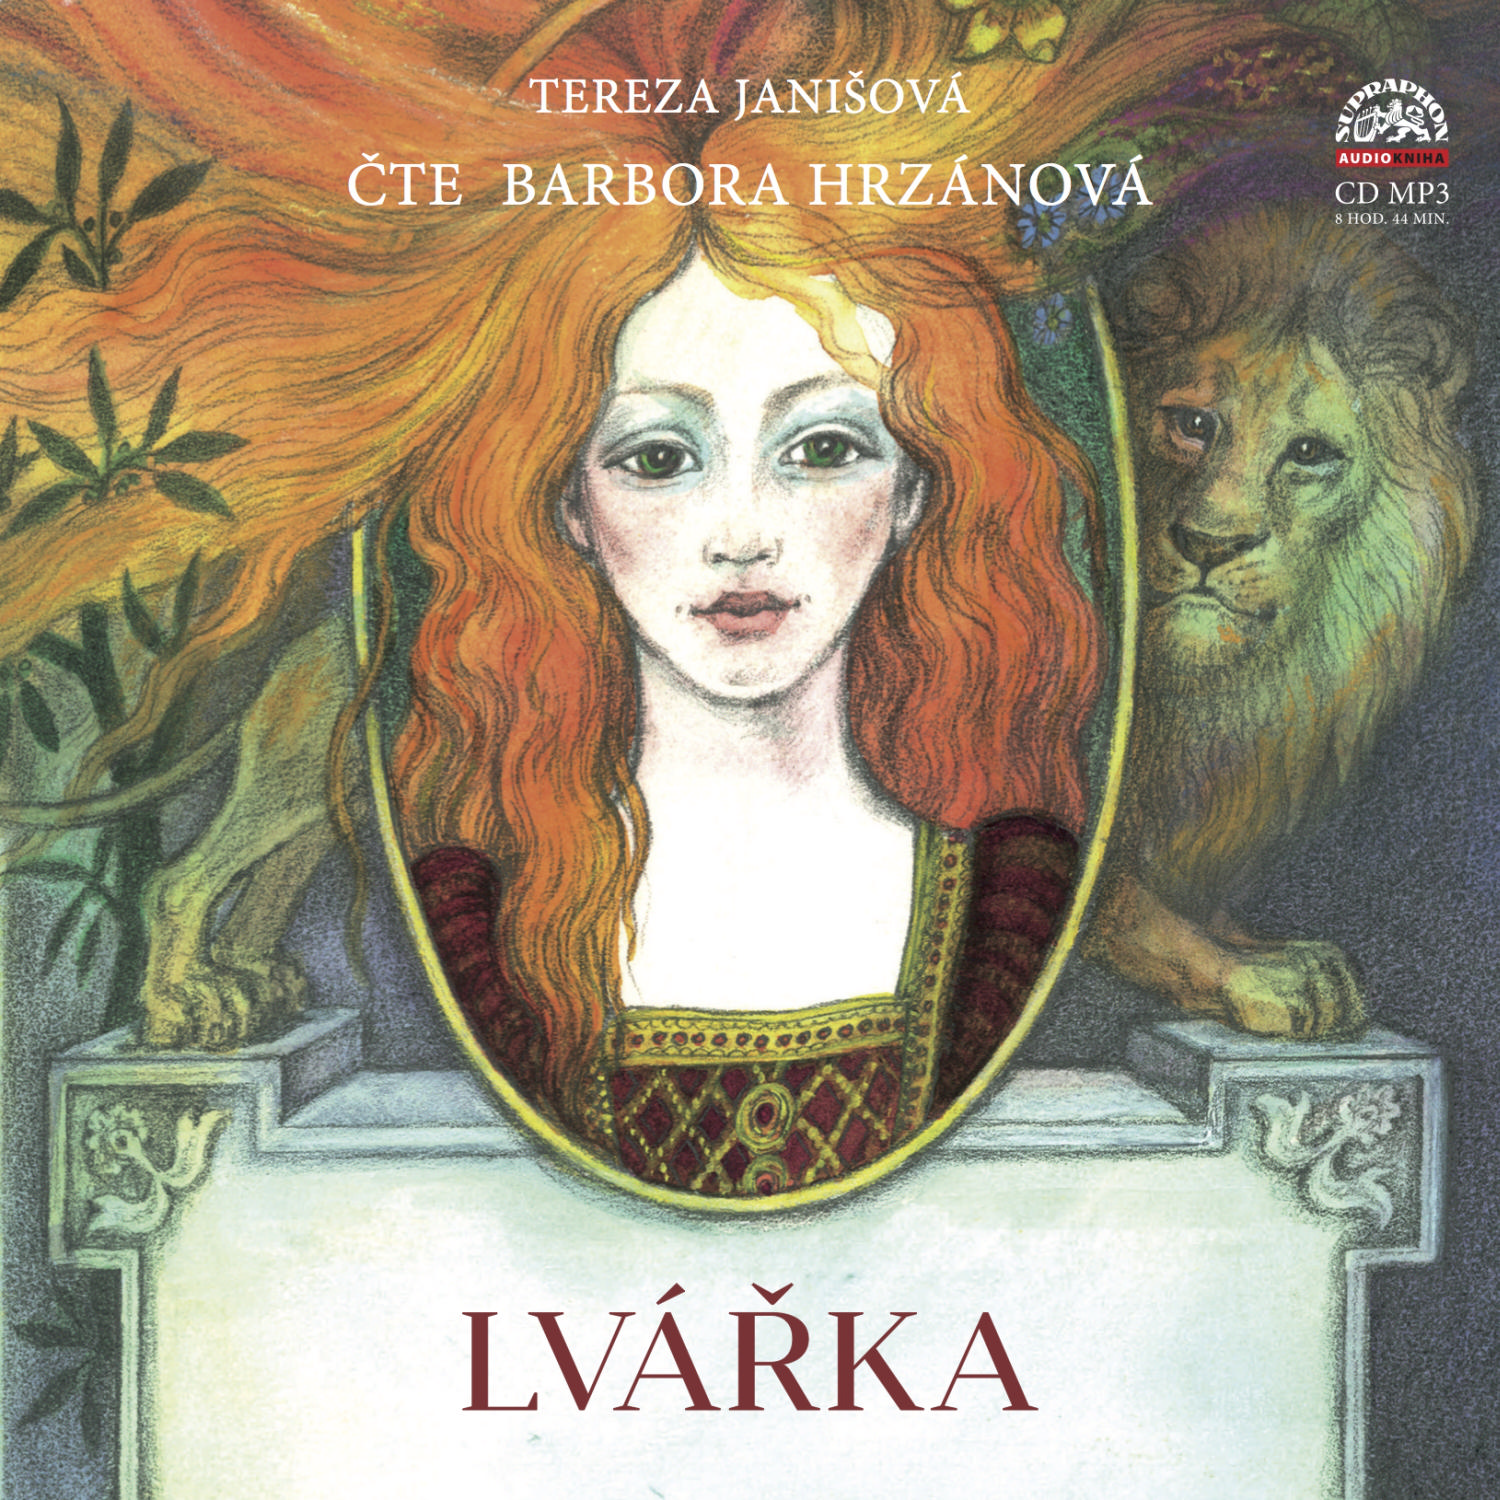 CD Shop - HRZANOVA BARBORA LVARKA (MP3-CD)